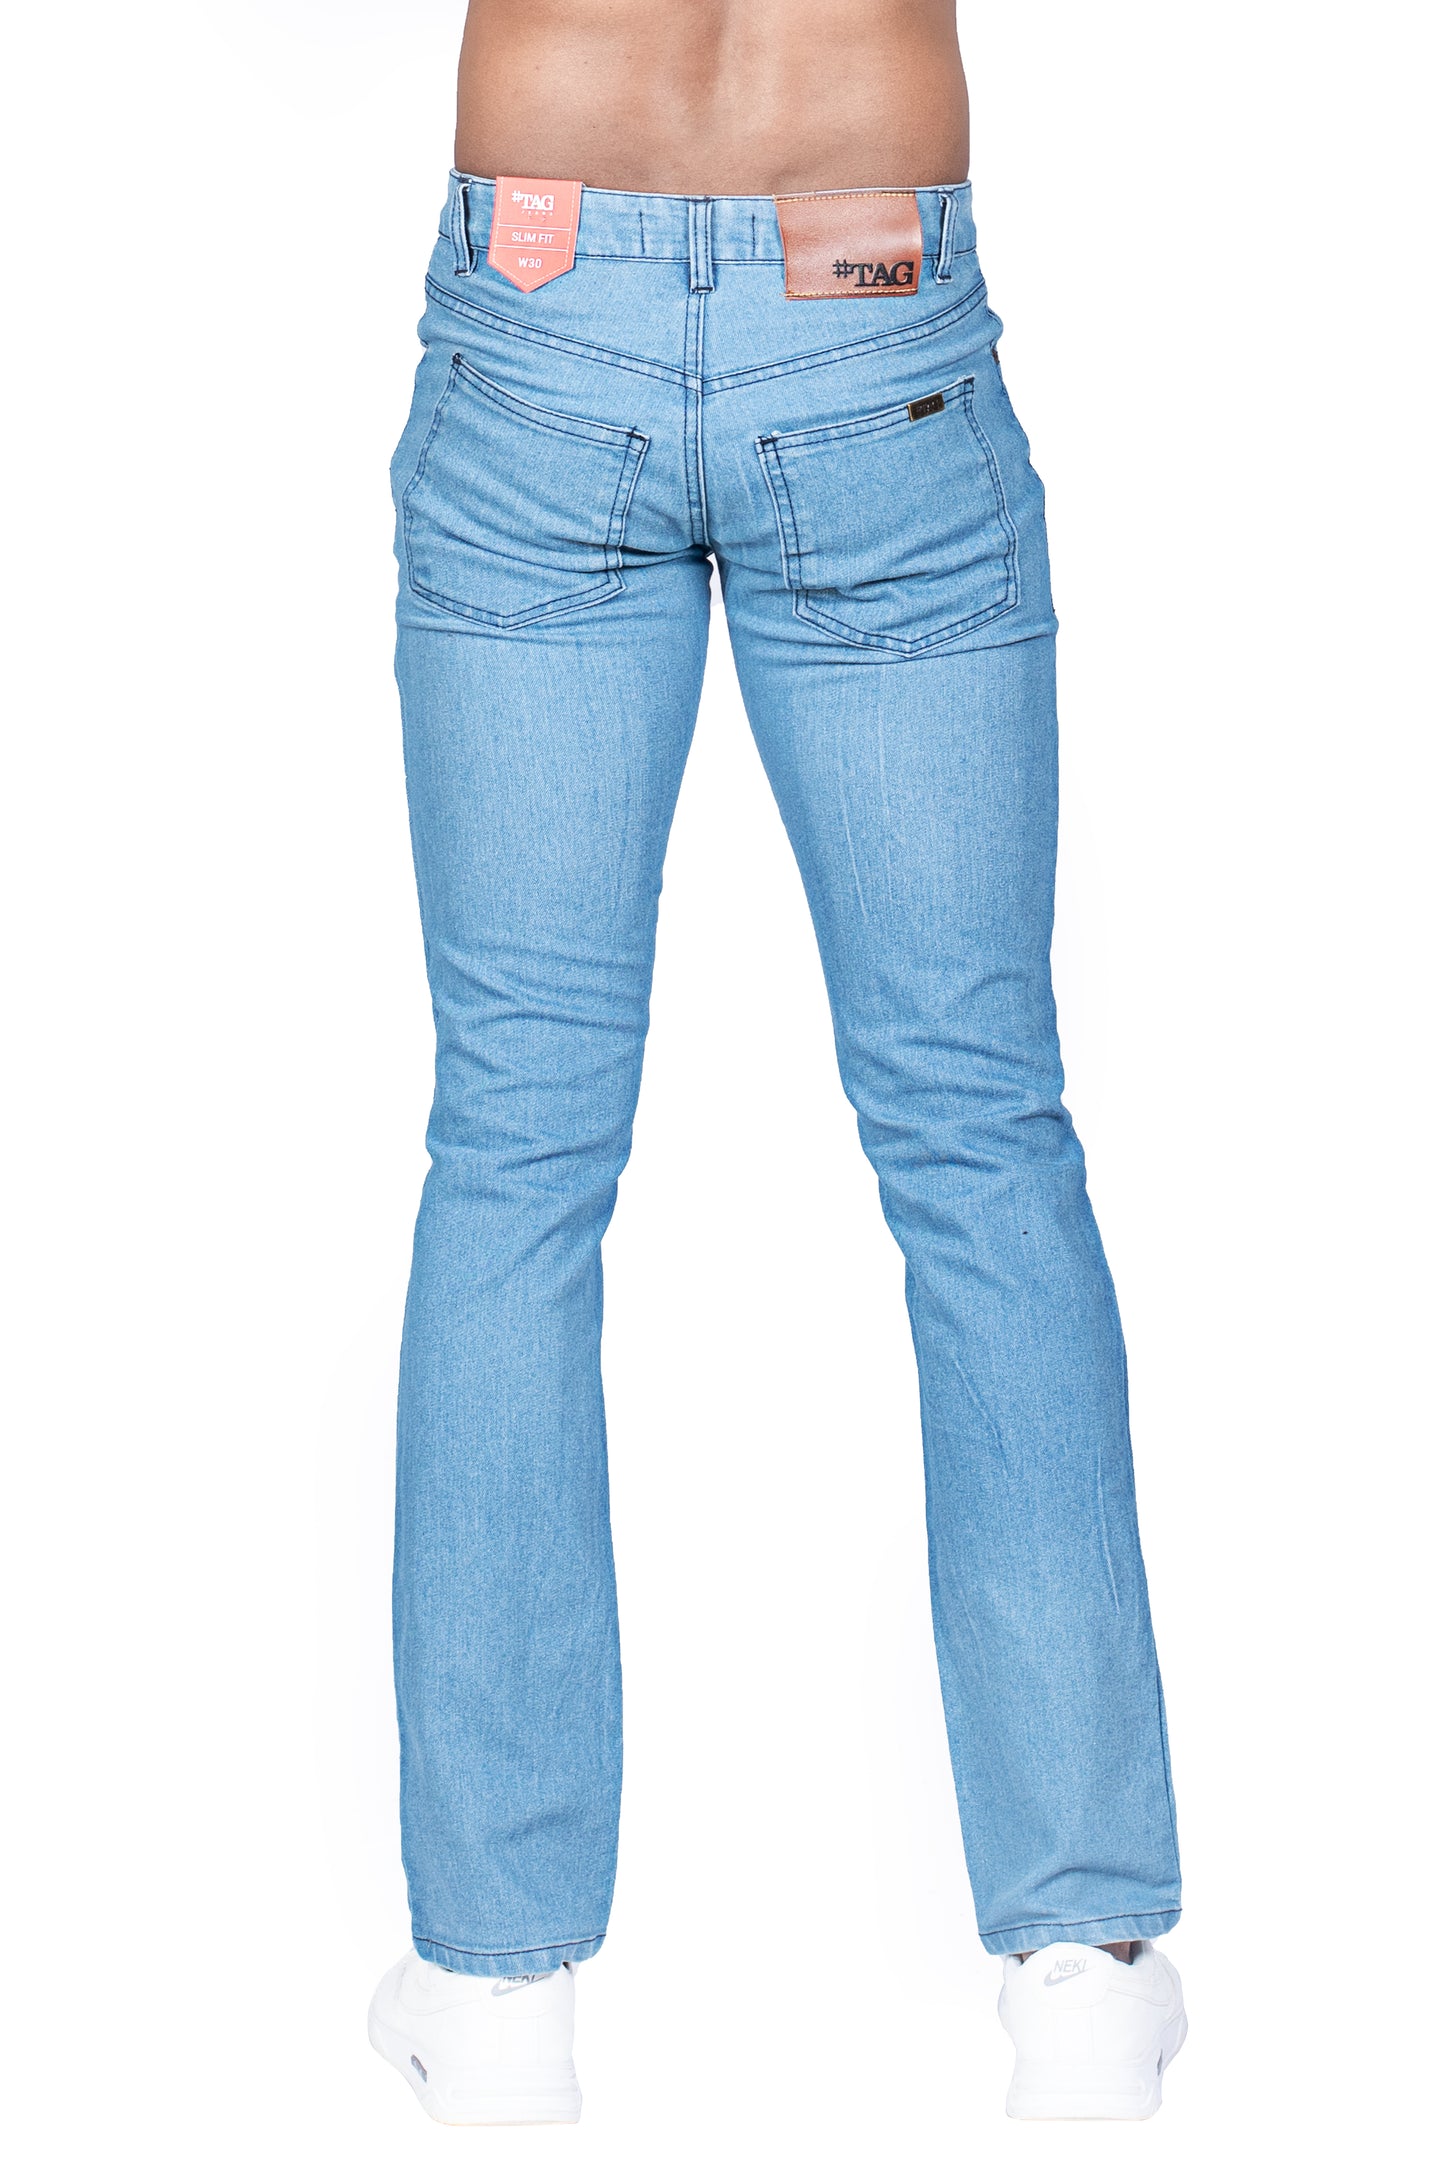 Men's Tooled Detailed Slim Fit Jeans in Light Blue Wash